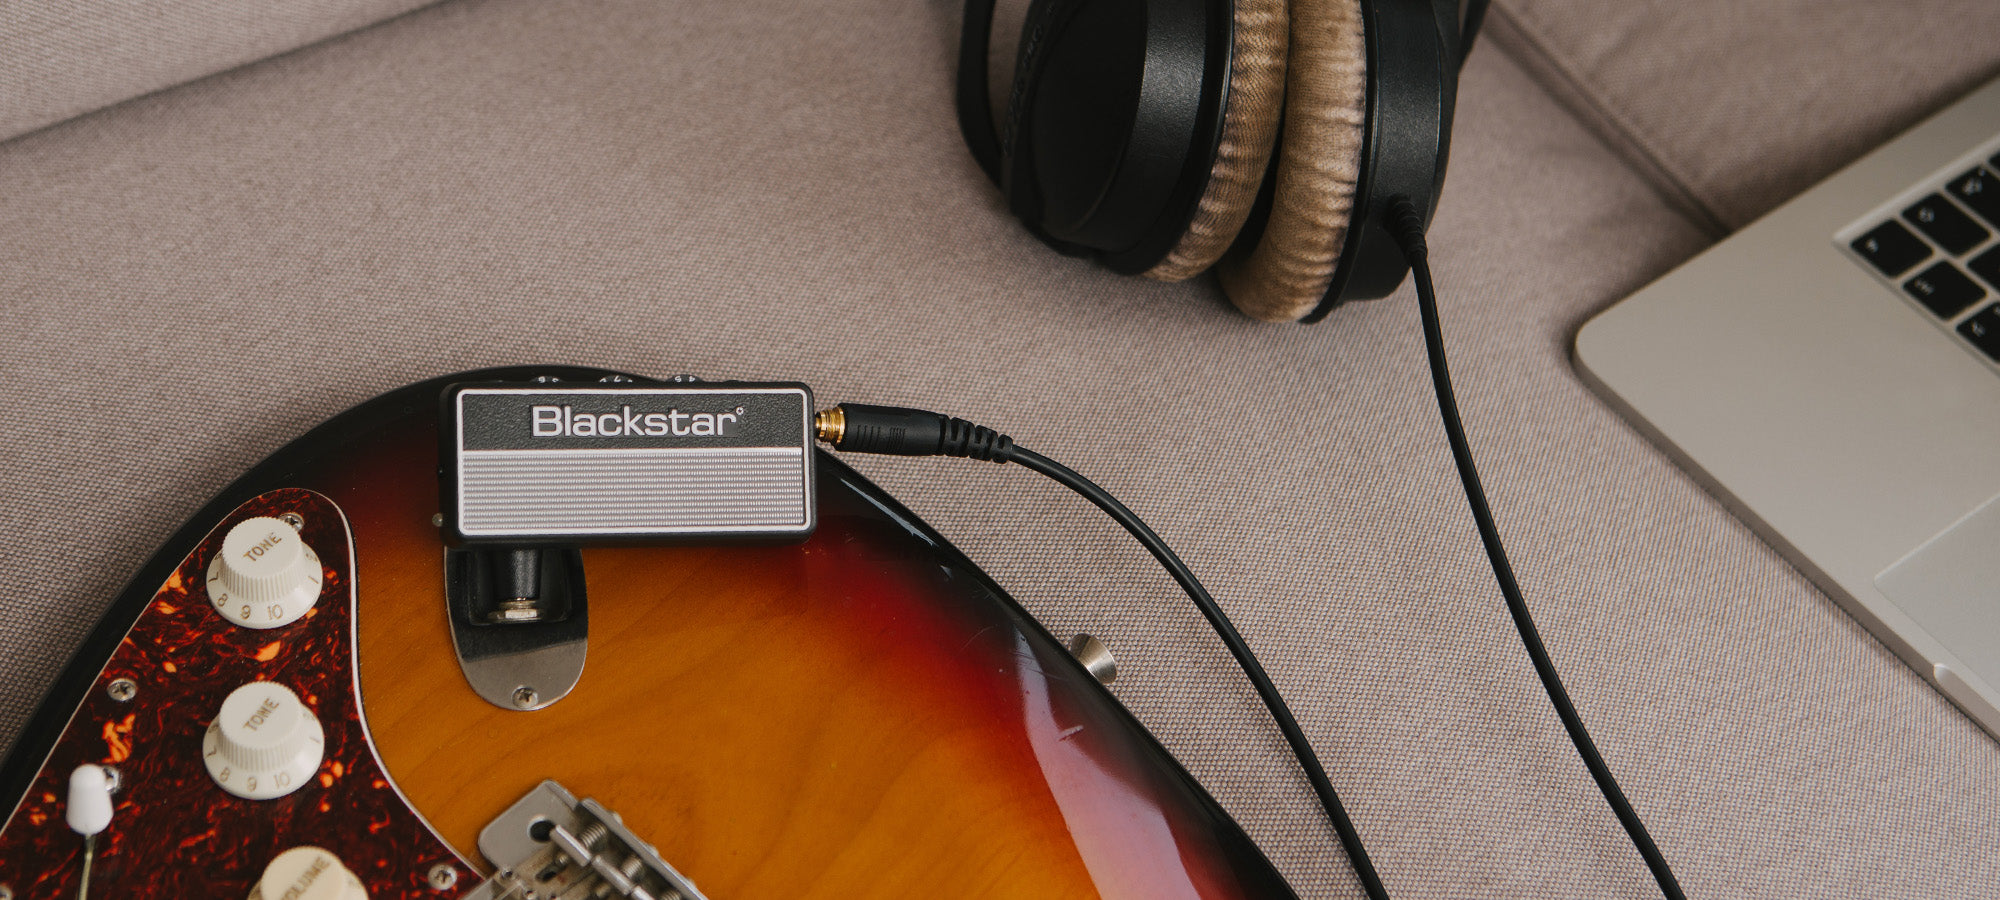 guitar player strumming guitar with Blackstar amPlug 2 FLY guitar amp plugged into guitar and headphones